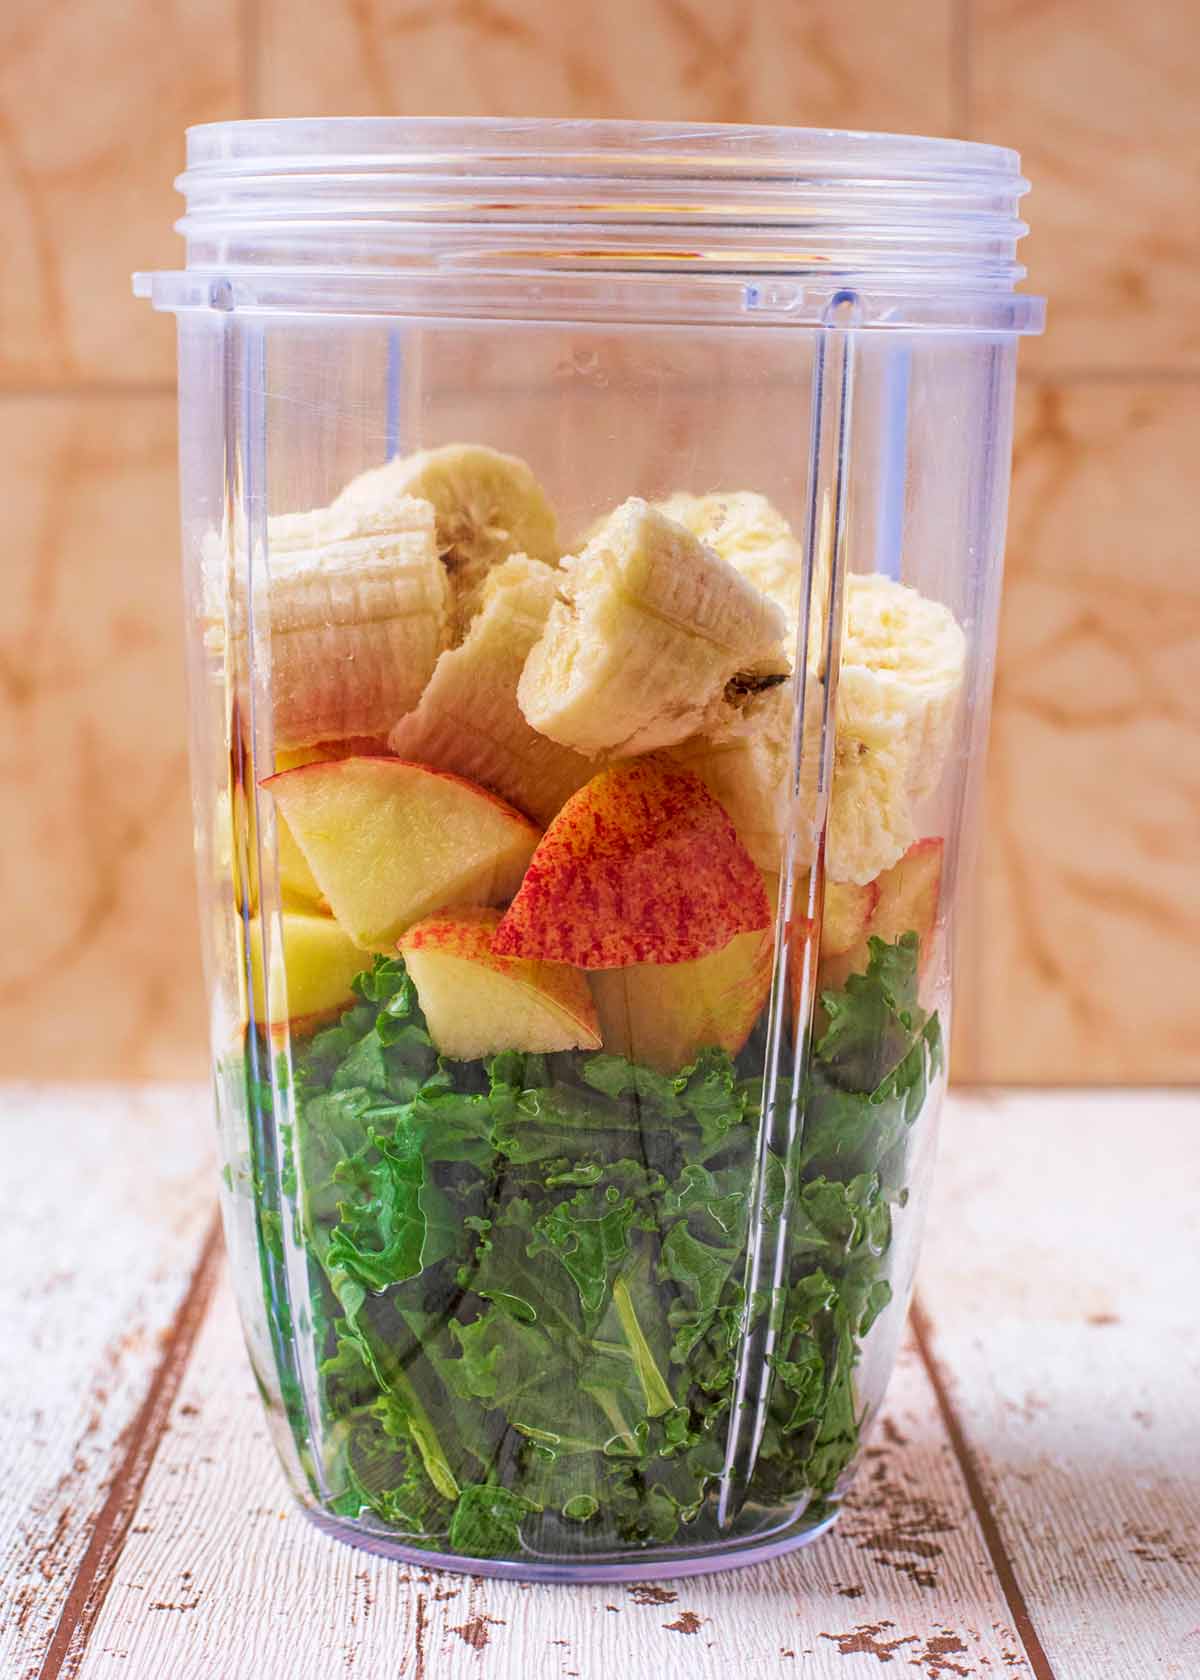 Kale leaves, sliced banana and chunks of apple in a blender jug.